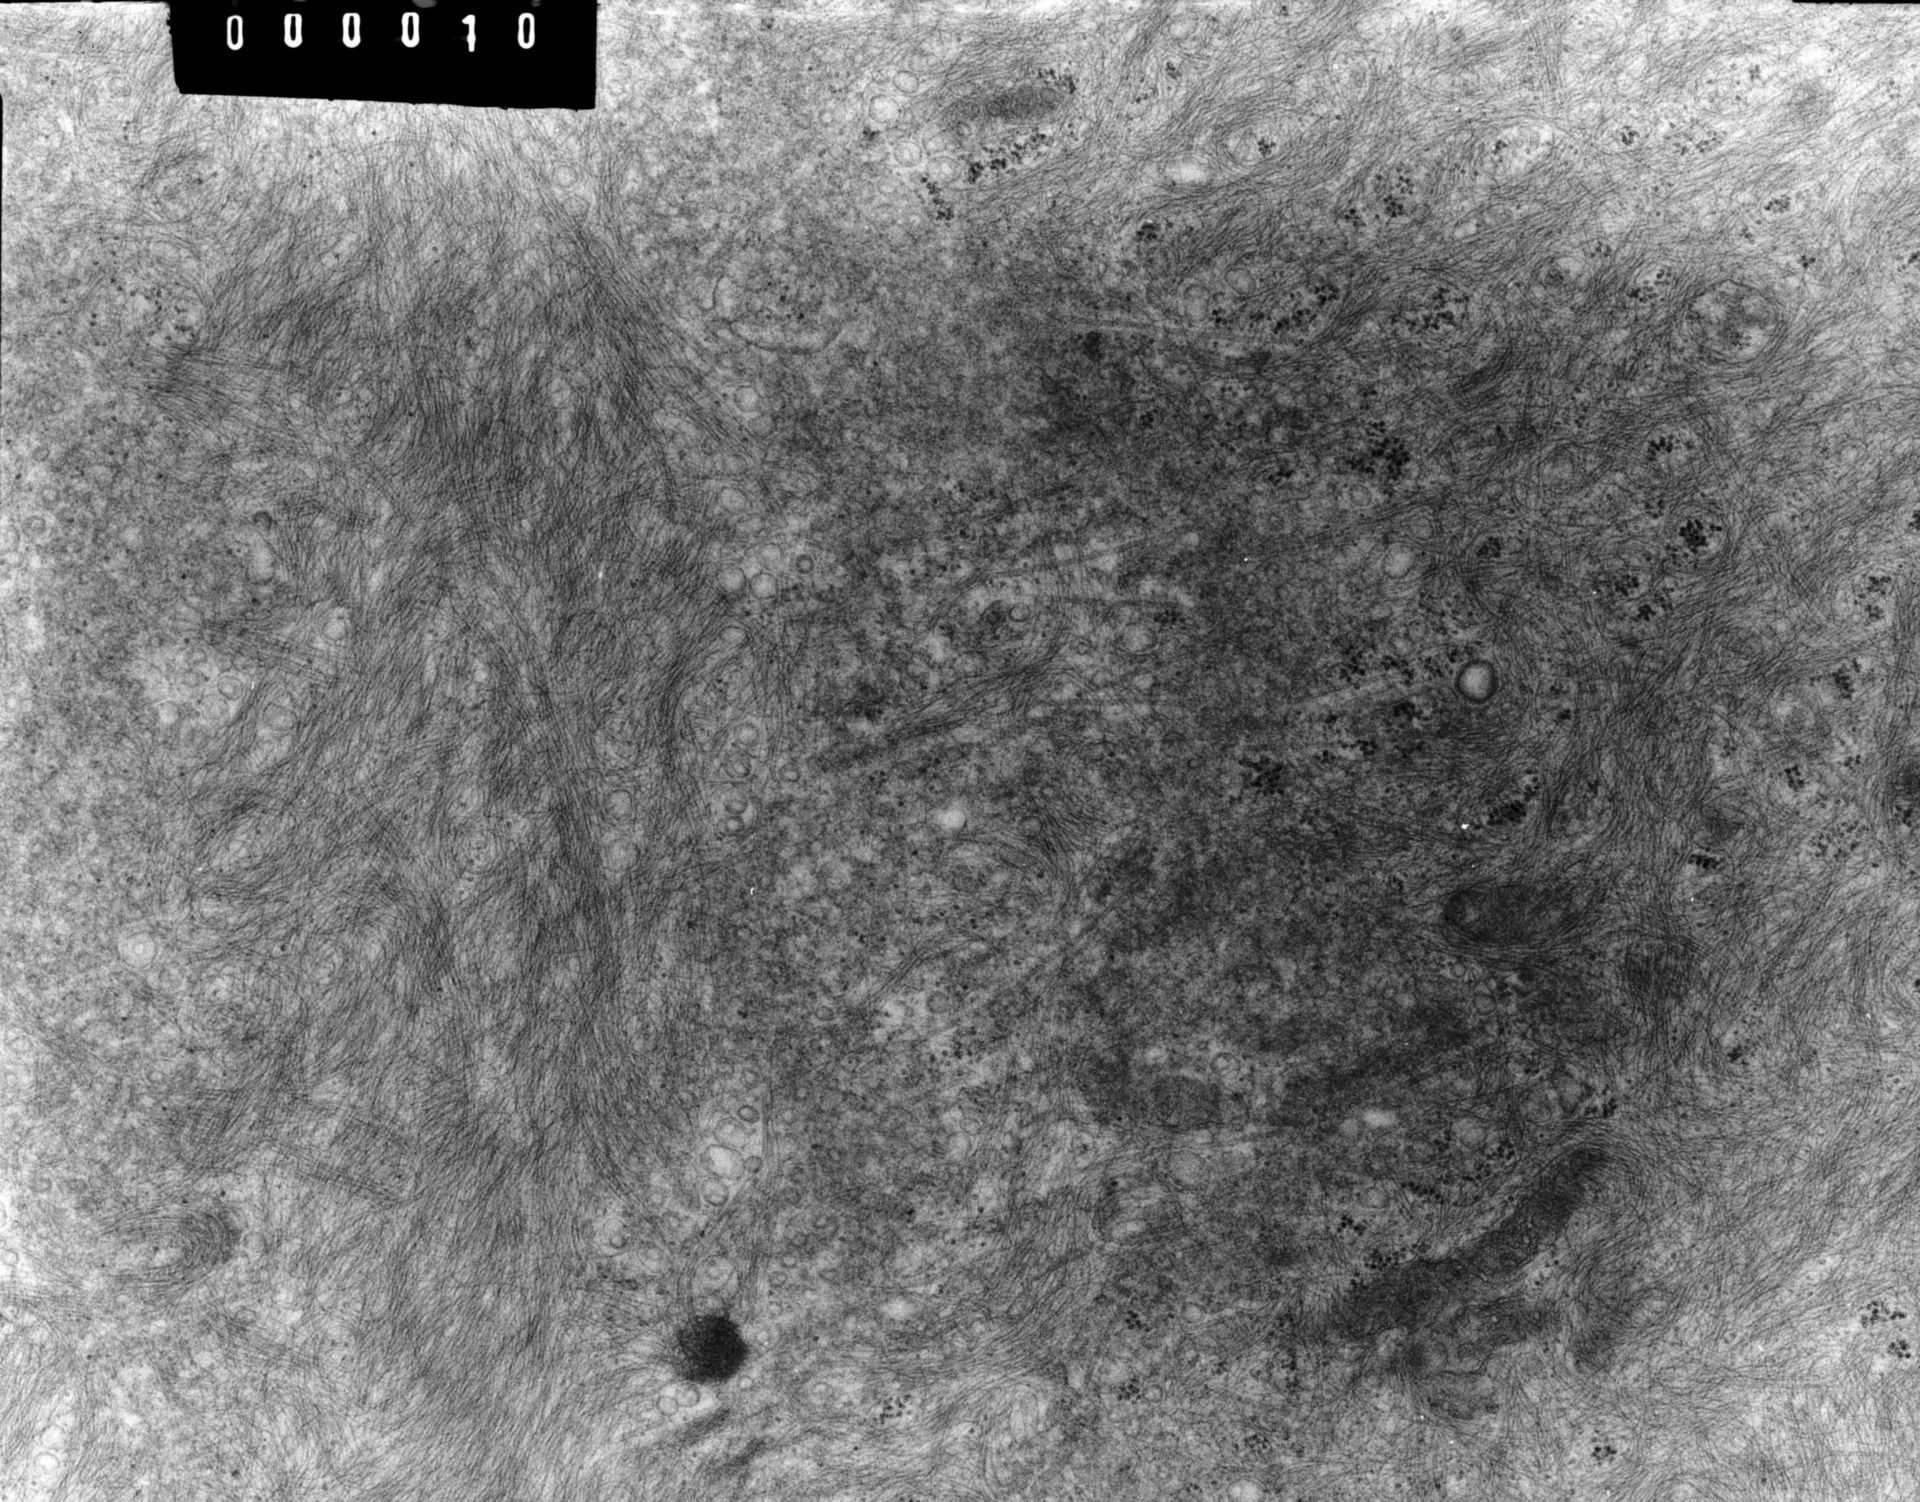 Rana catesbeiana (Plasma membrane) - CIL:10057